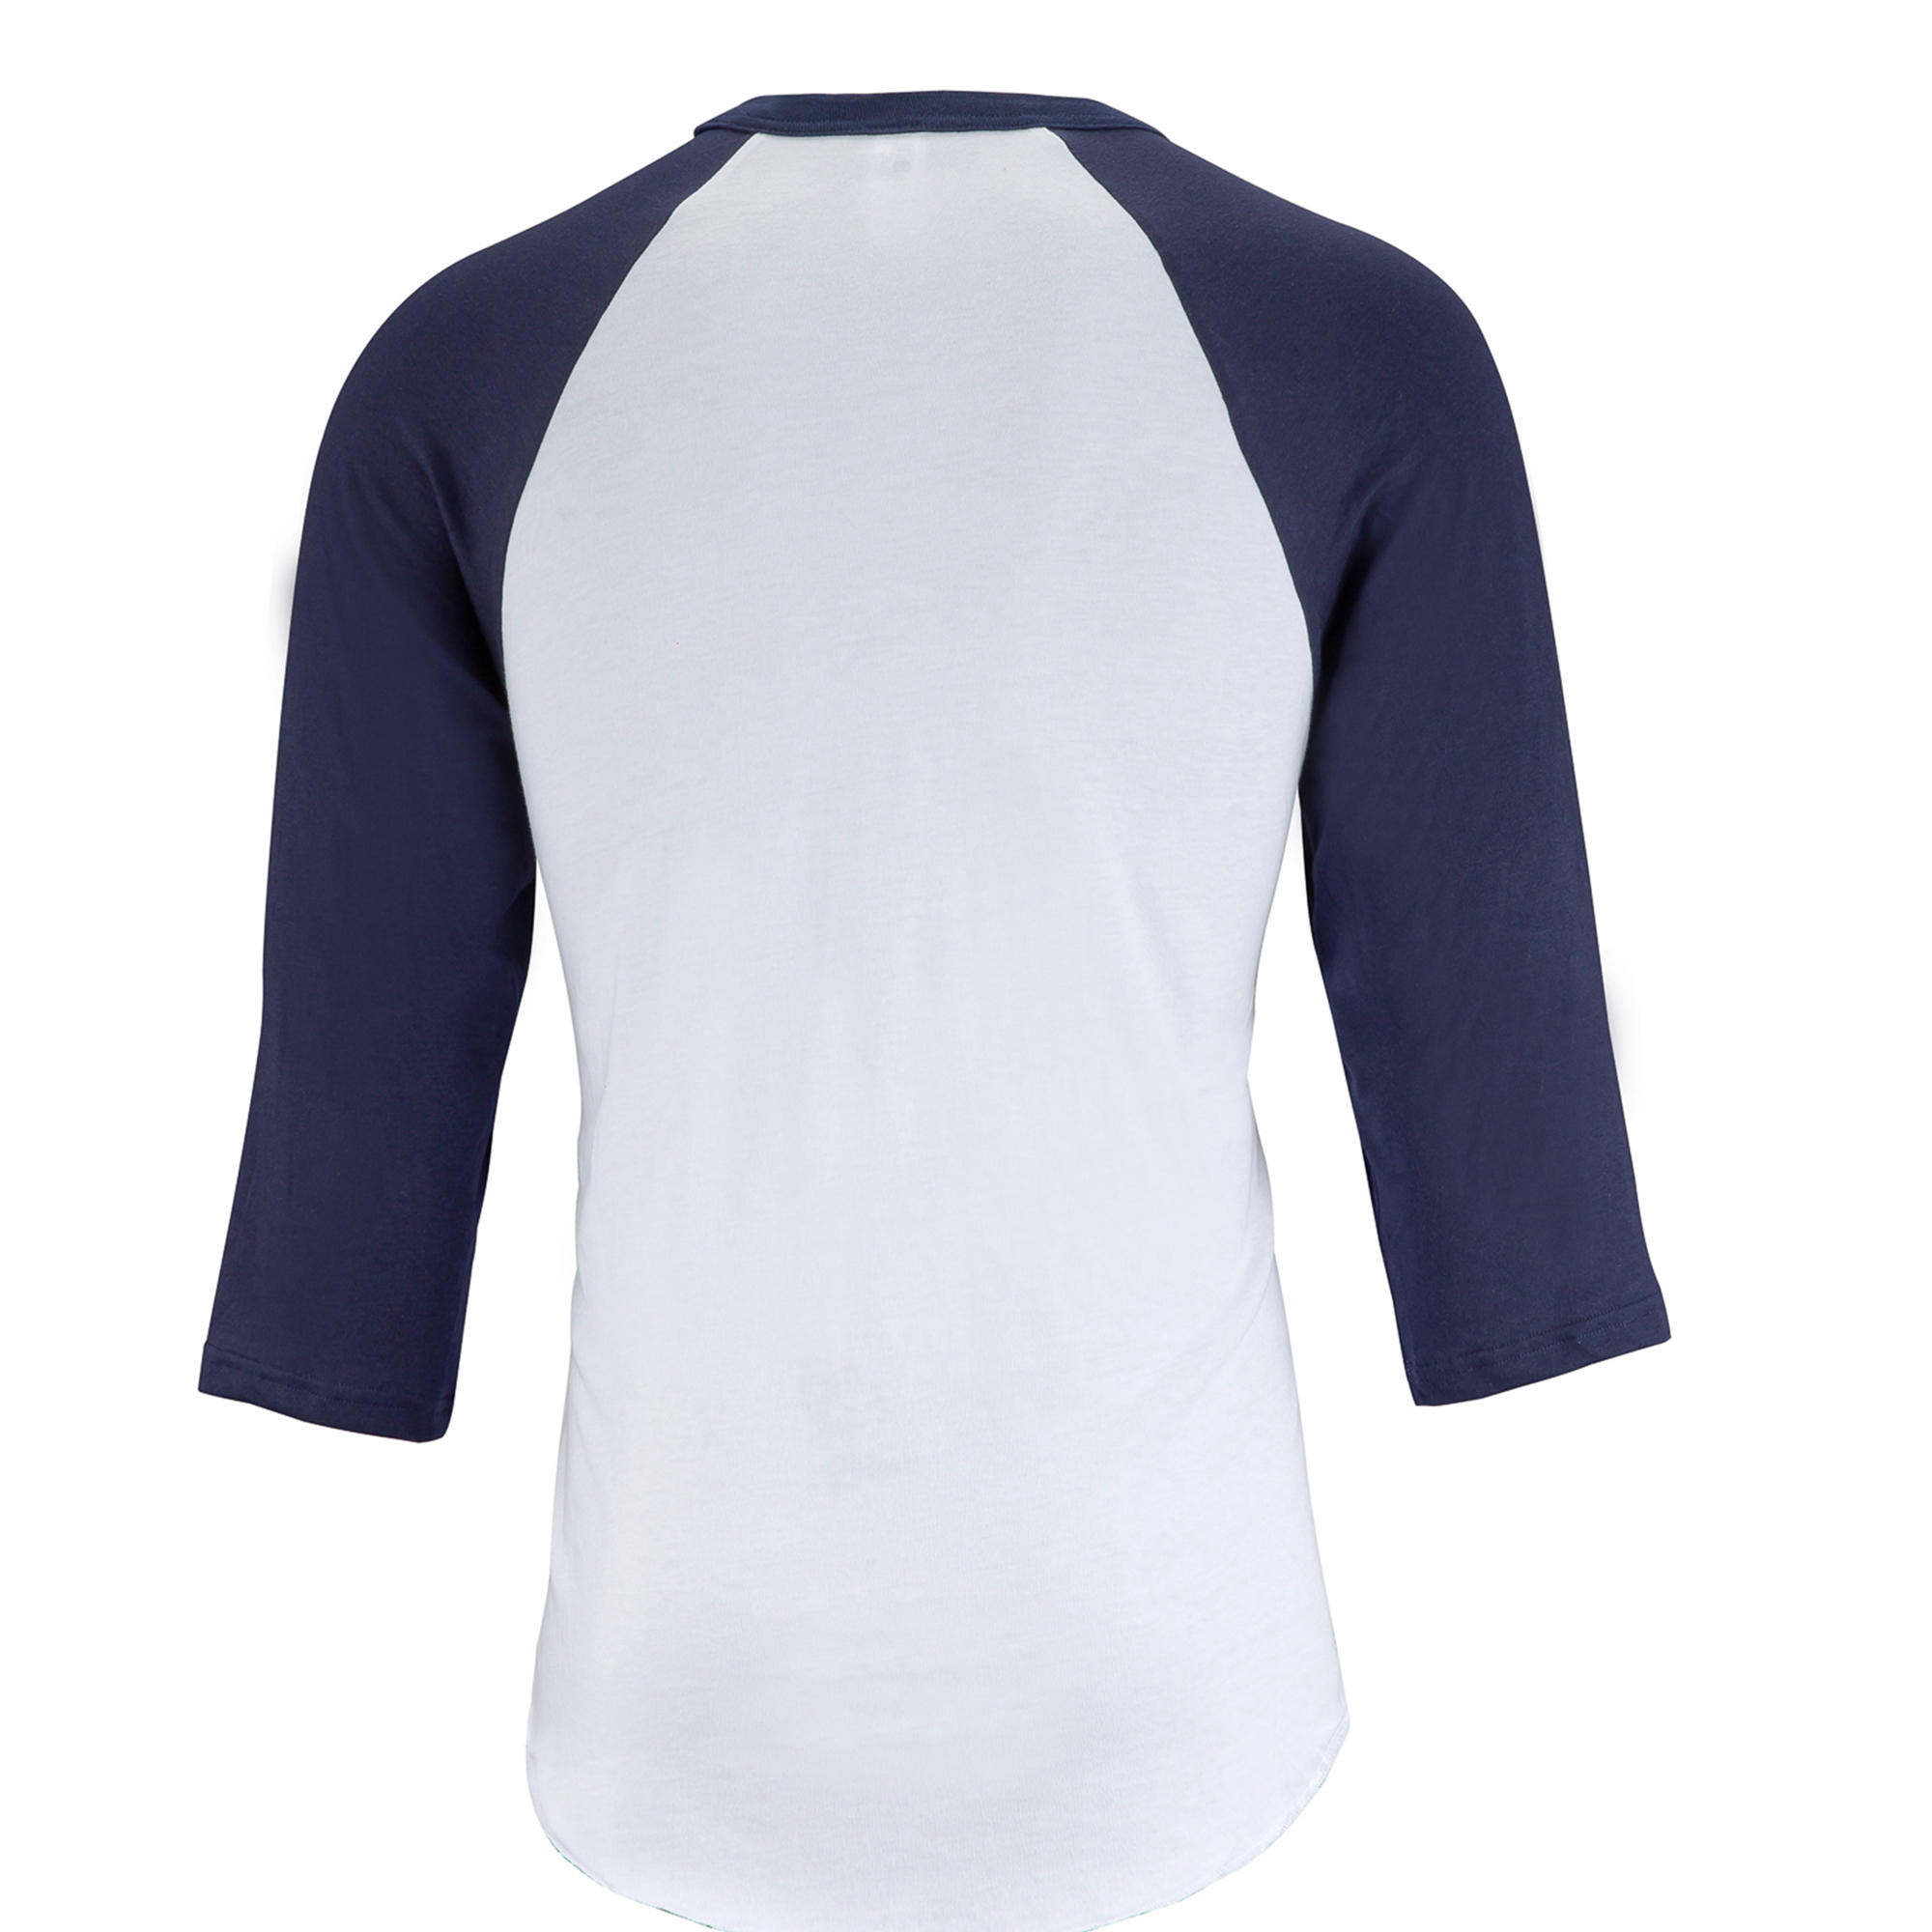 BA 550 Adult 3/4 Sleeve Baseball T-Shirt - White/Blue 3/4